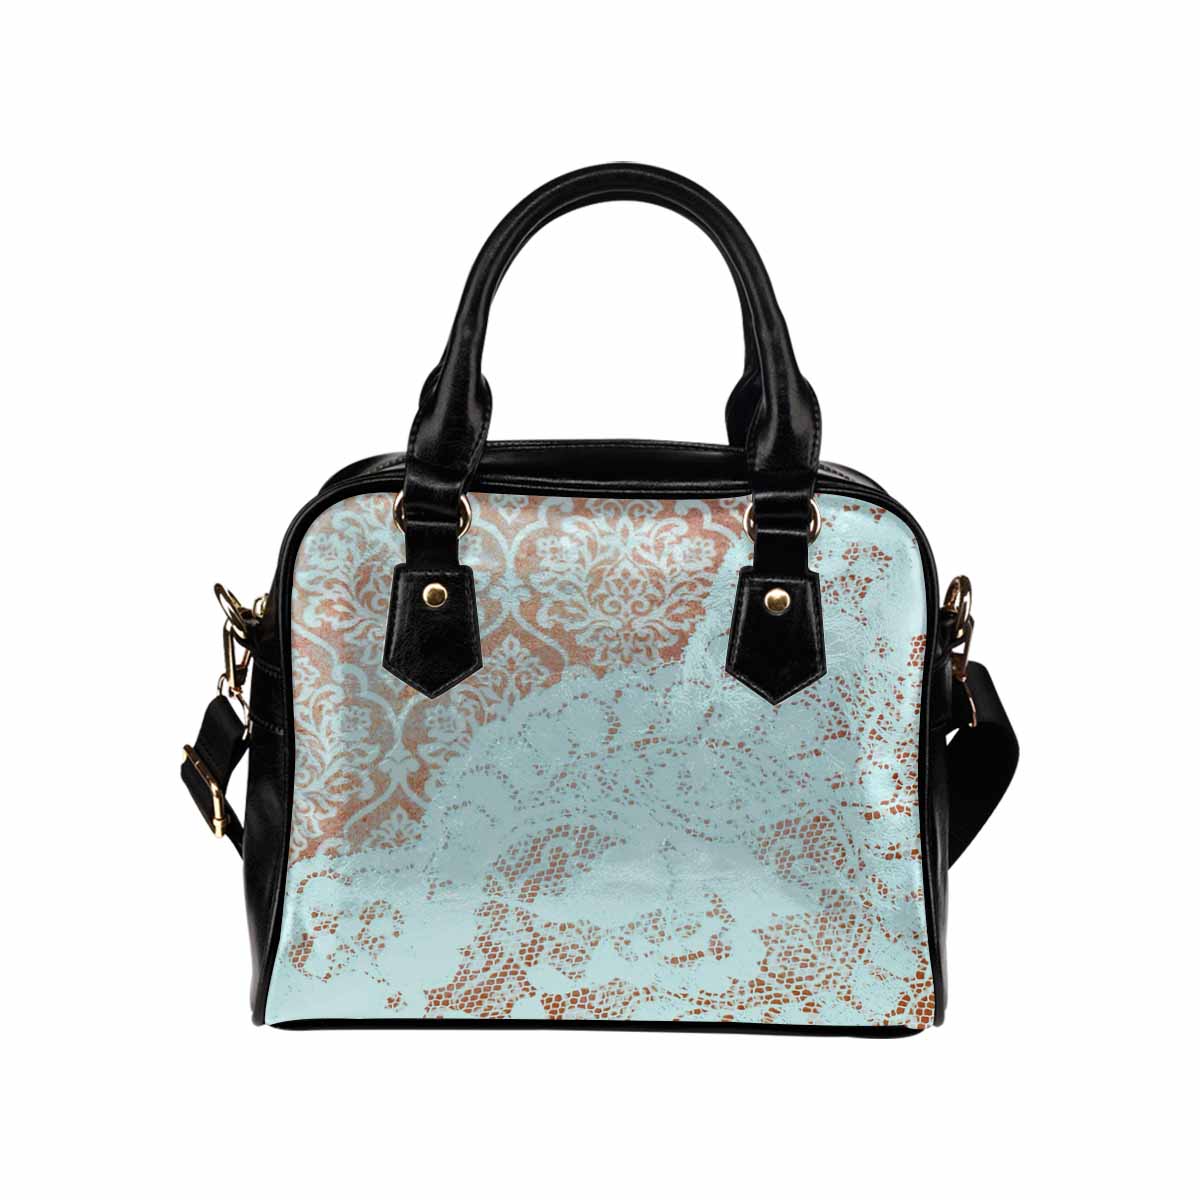 Victorian lace print, cute handbag, Mod 19163453, design 23